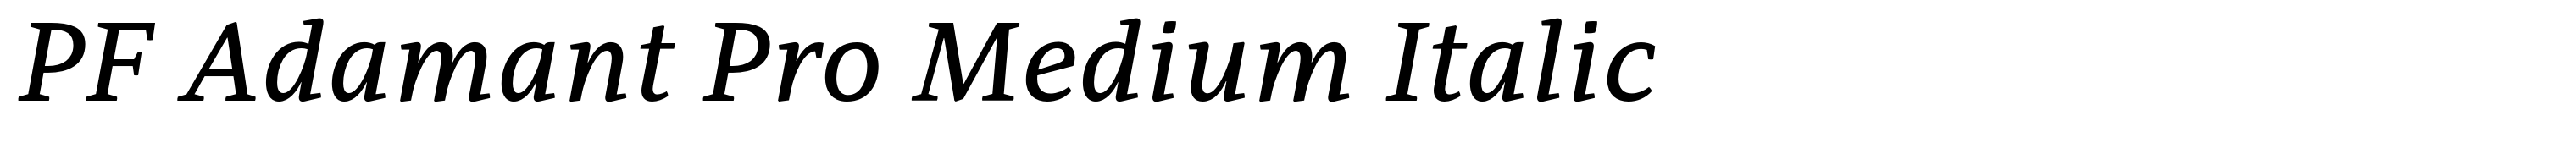 PF Adamant Pro Medium Italic